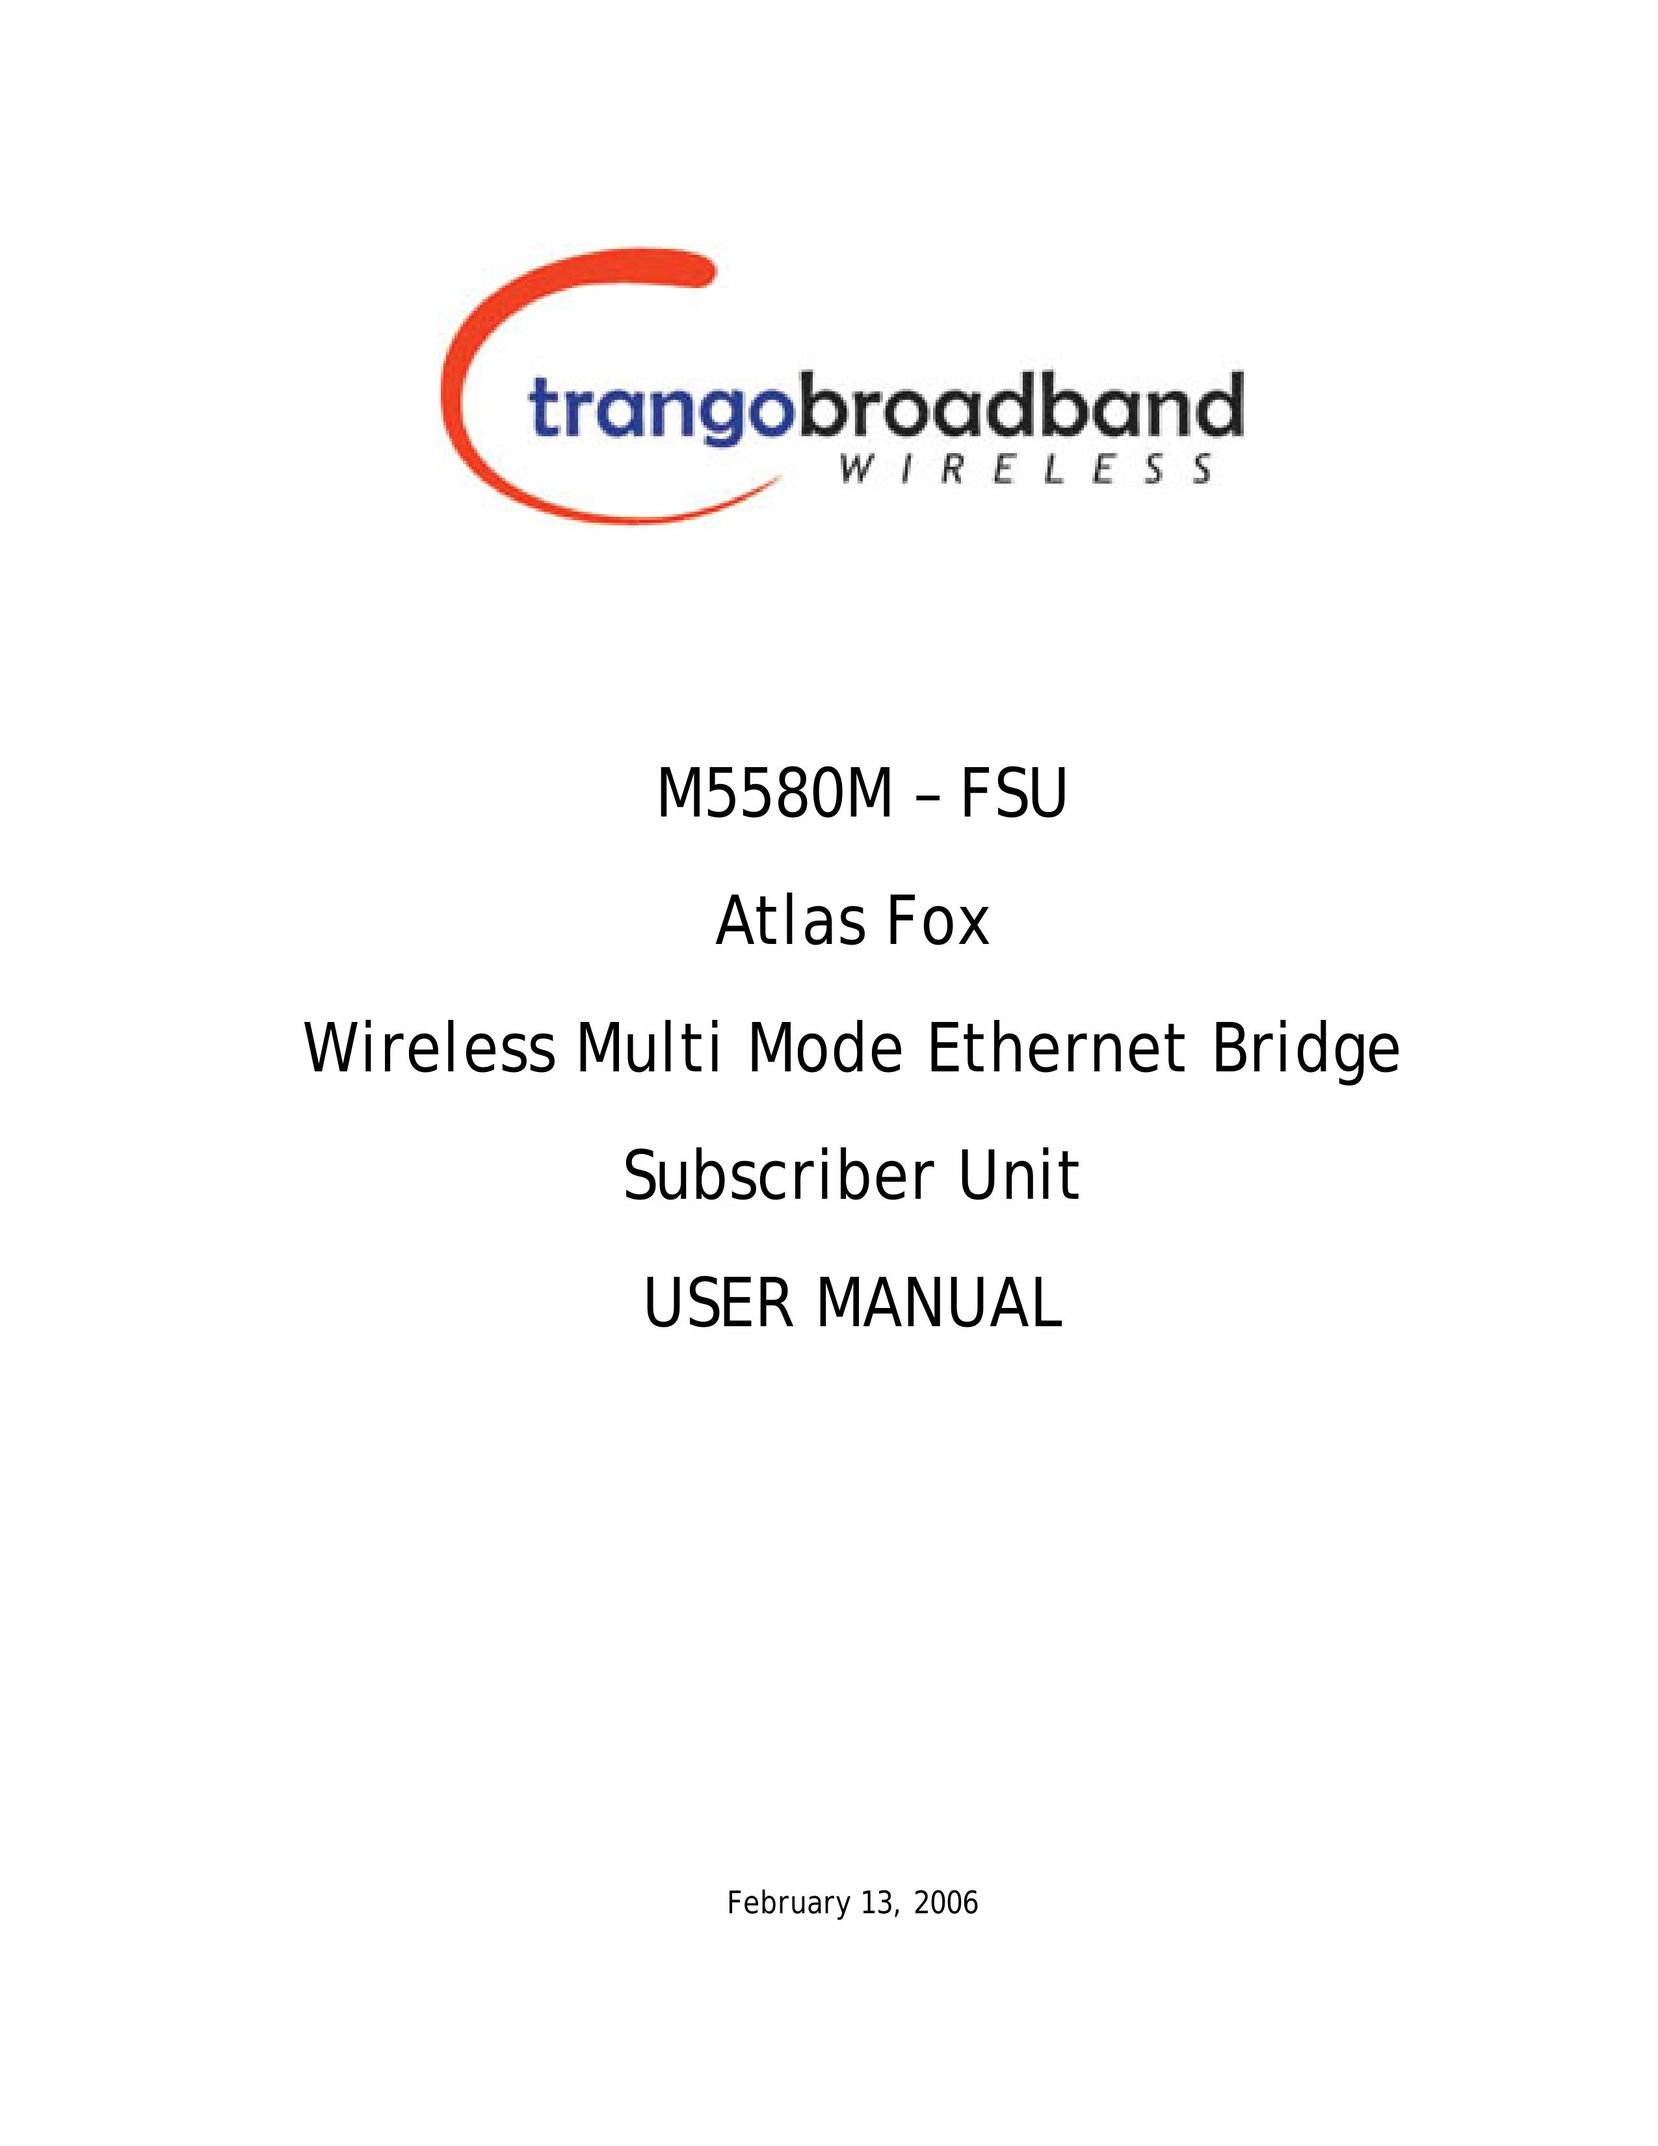 Trango Broadband M5580M-FSU Network Card User Manual